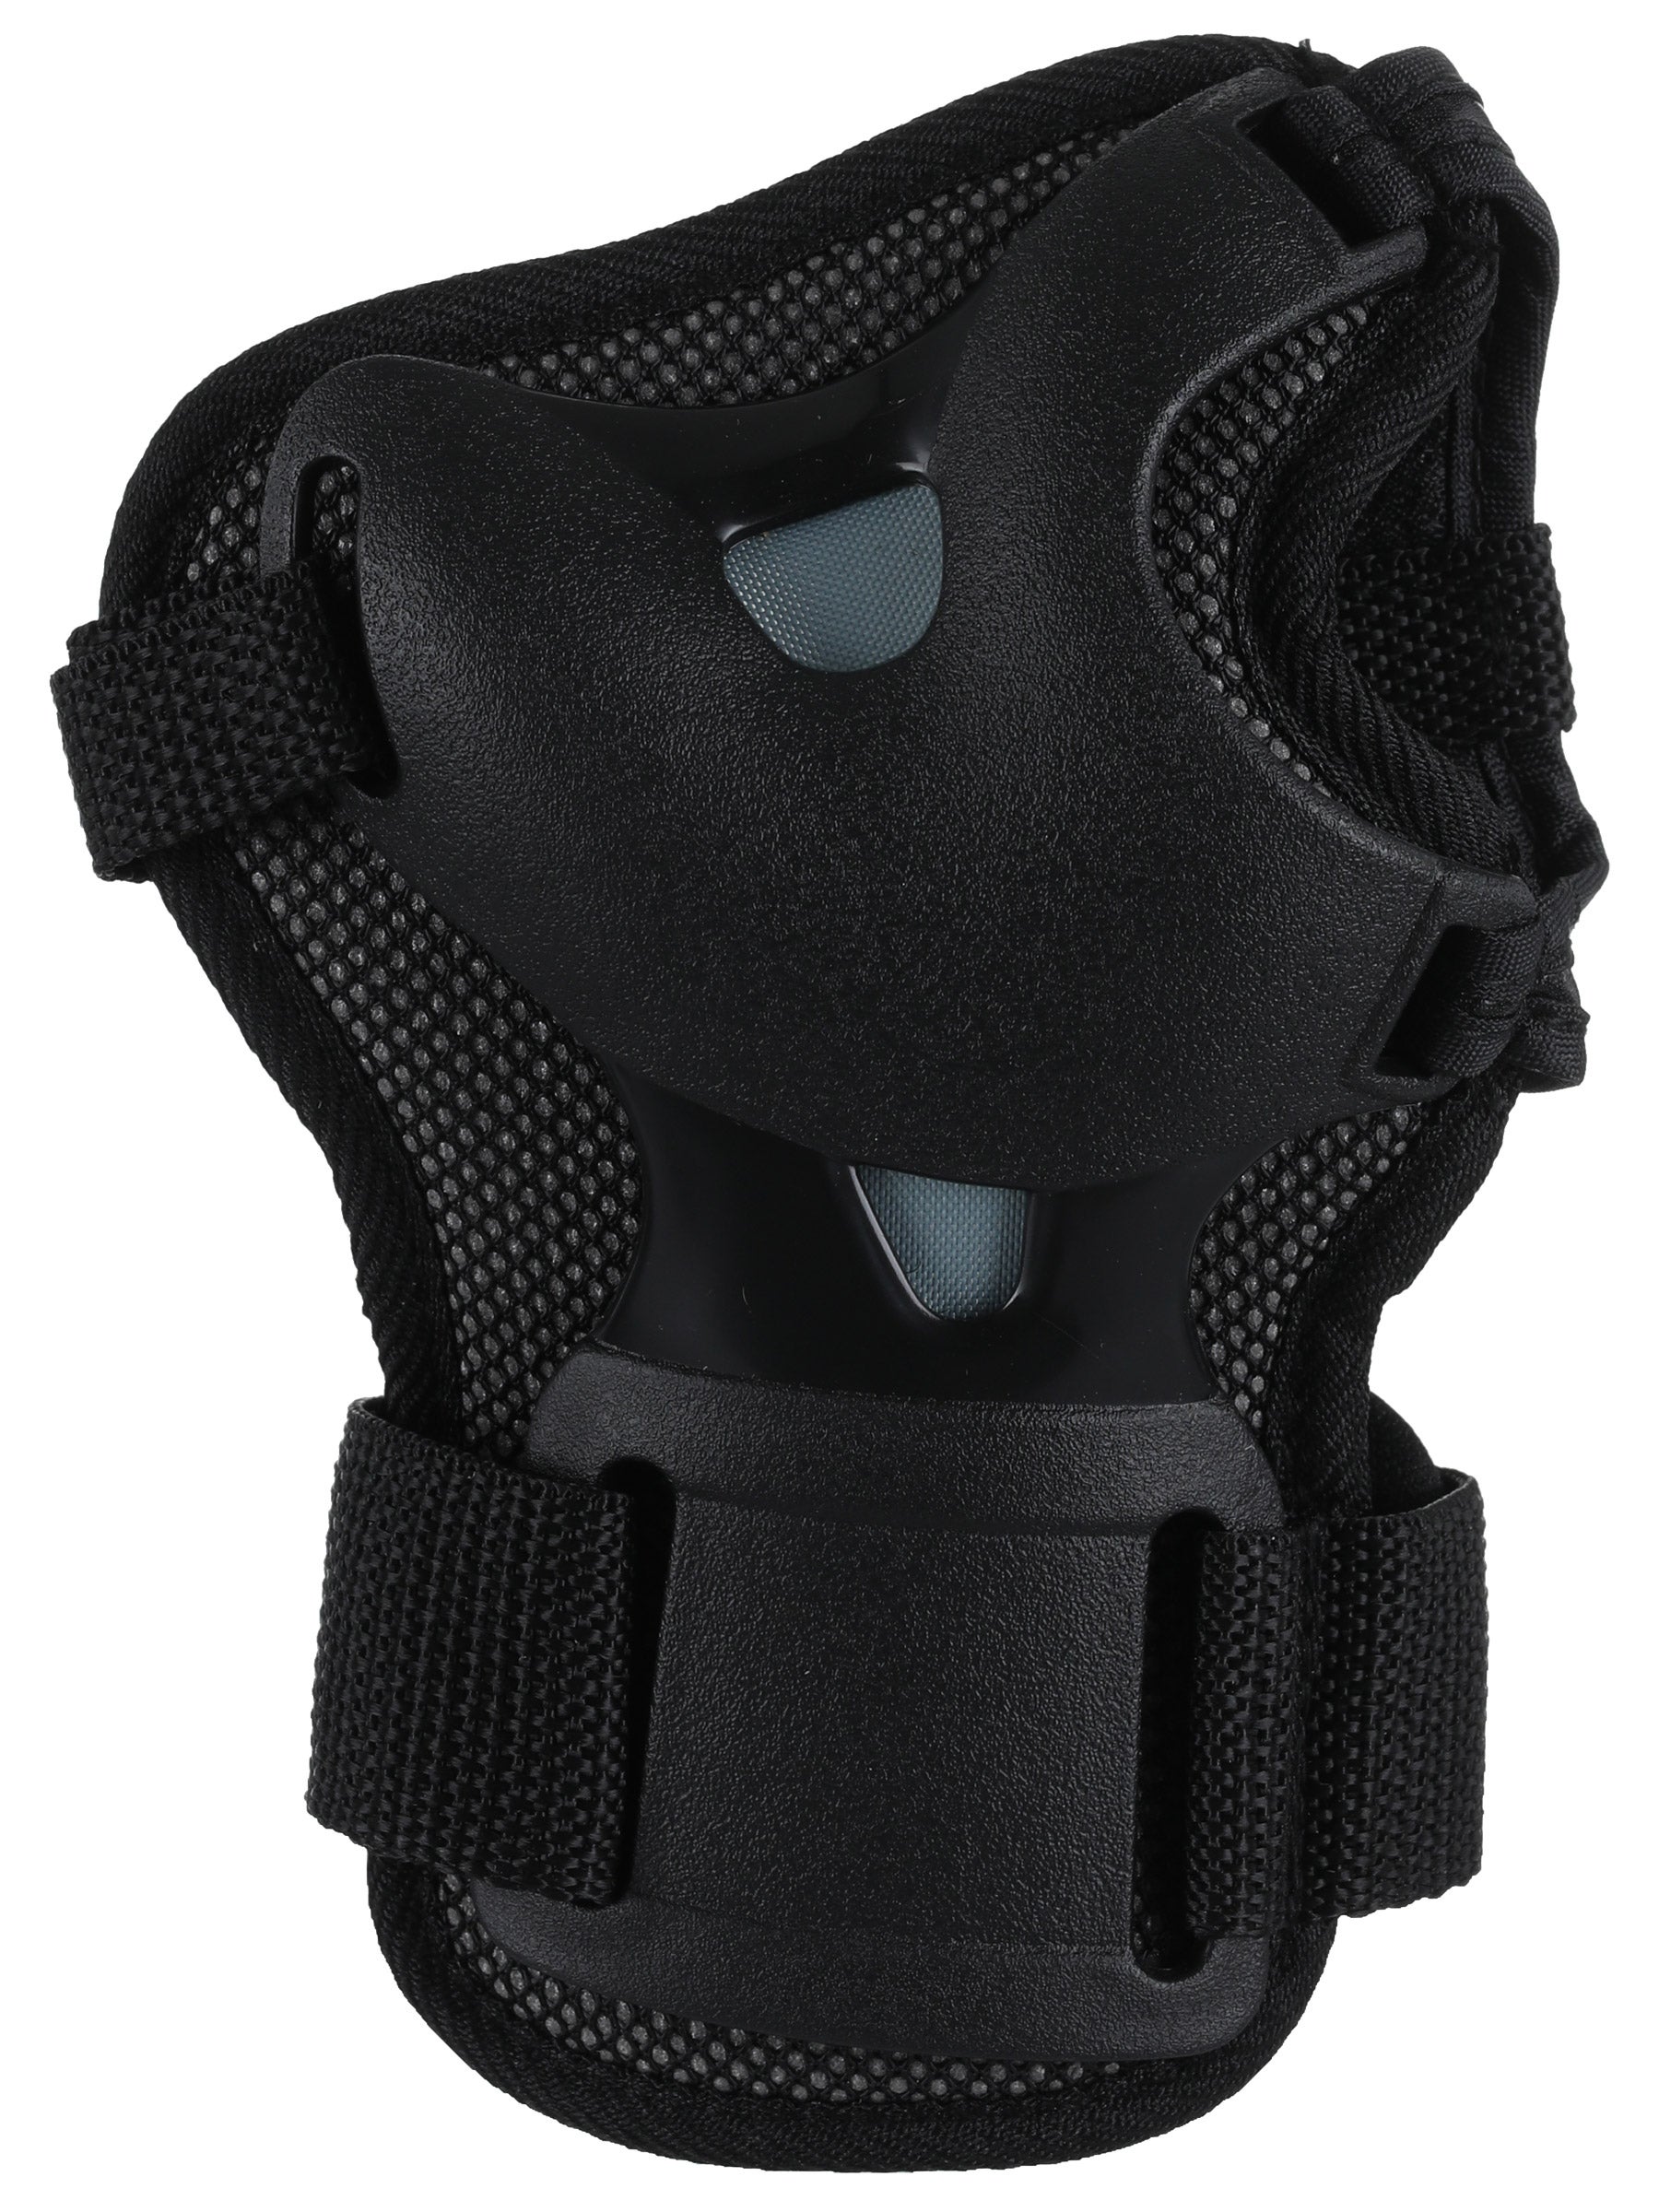 Unisex Rollerblade Luxgear Plus Wrist Guards Protective Gear,Multi Sport Protection Black 